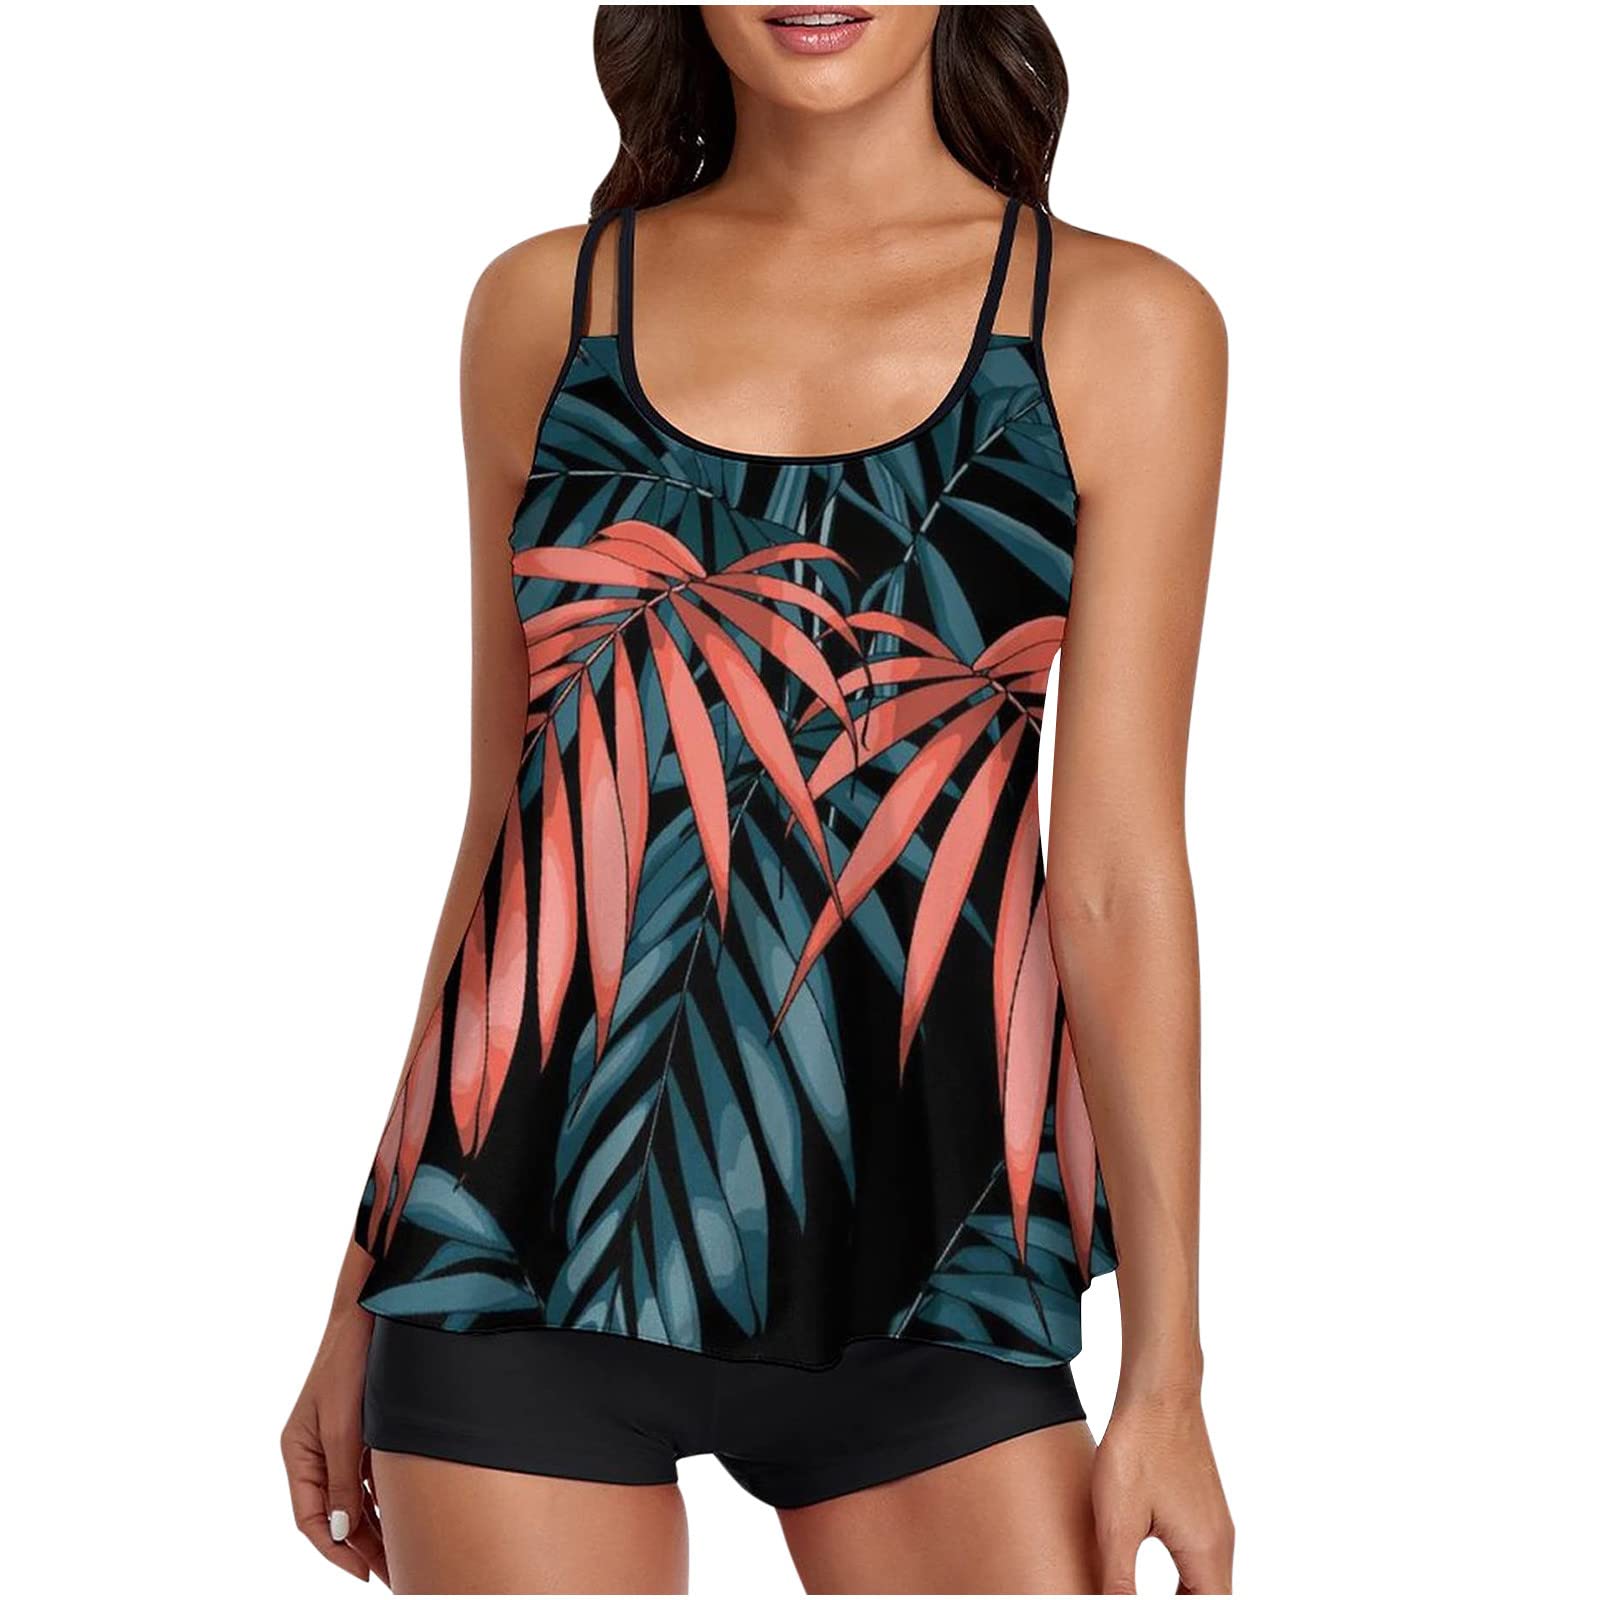 Tankini Swimsuit for Women Bathing Suit Printed Lined Swimwear 